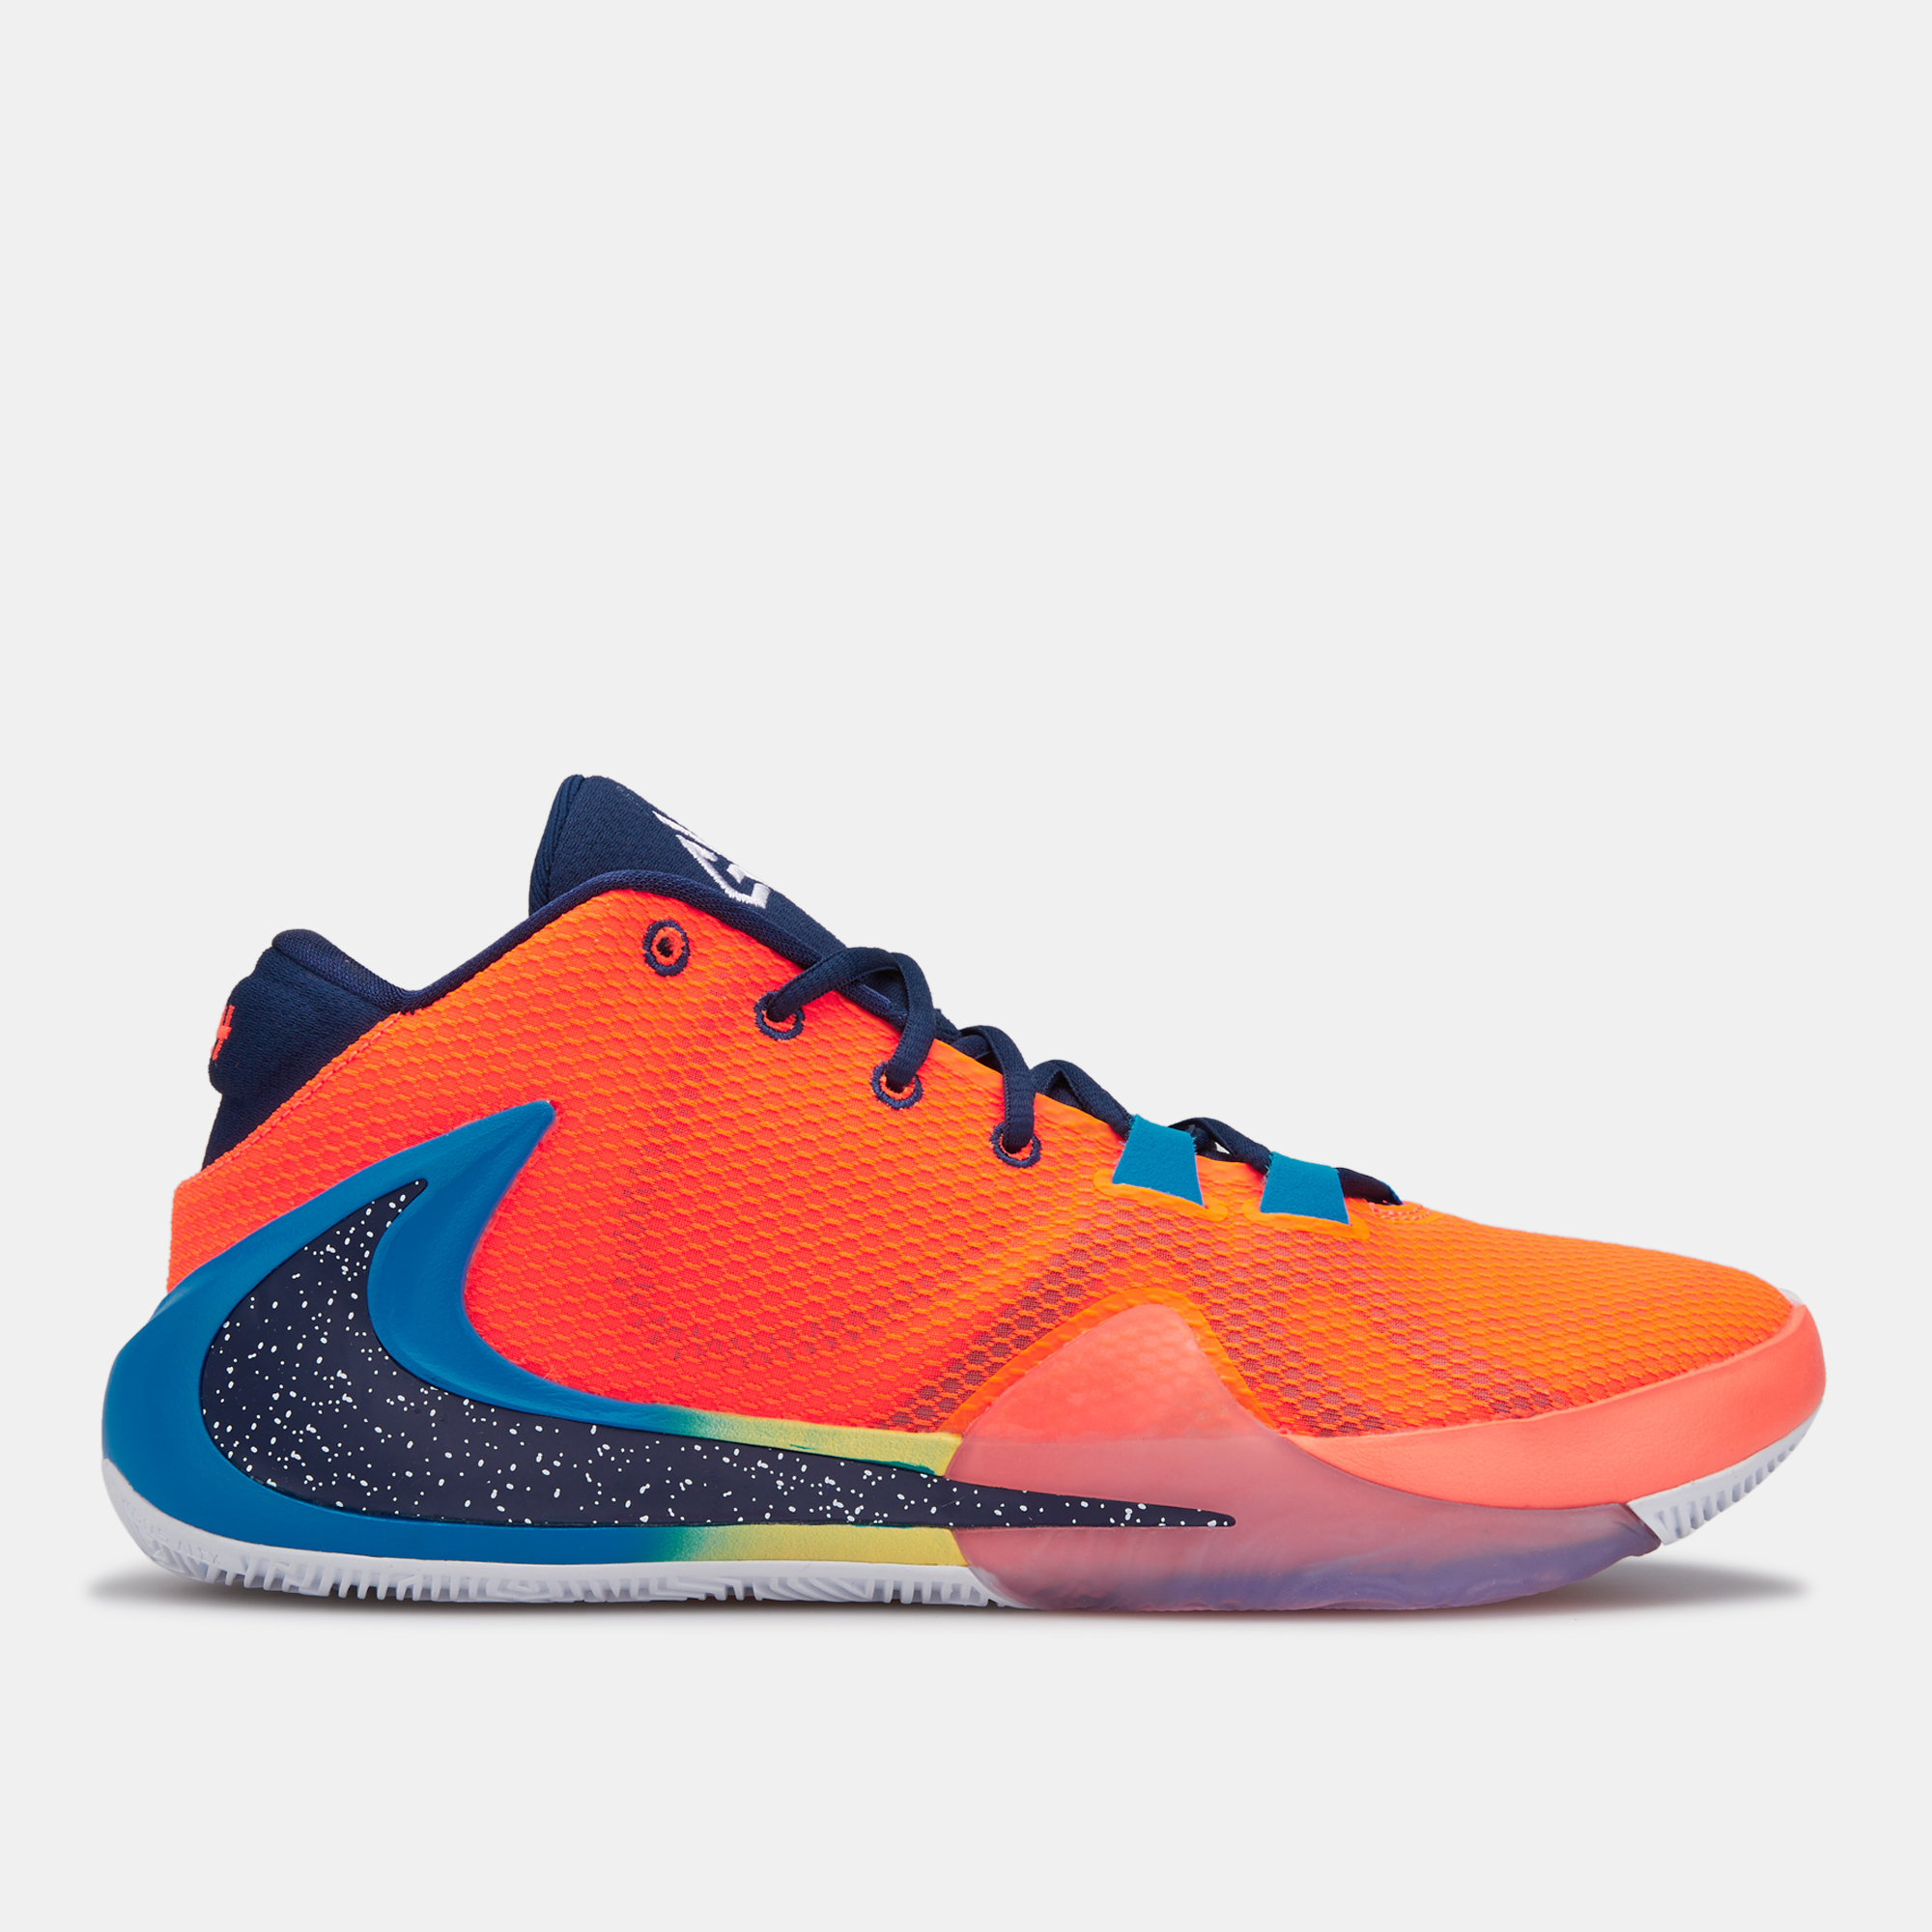 Buy Nike Men's Zoom Freak 1 Basketball Shoe Online in Dubai, UAE | SSS